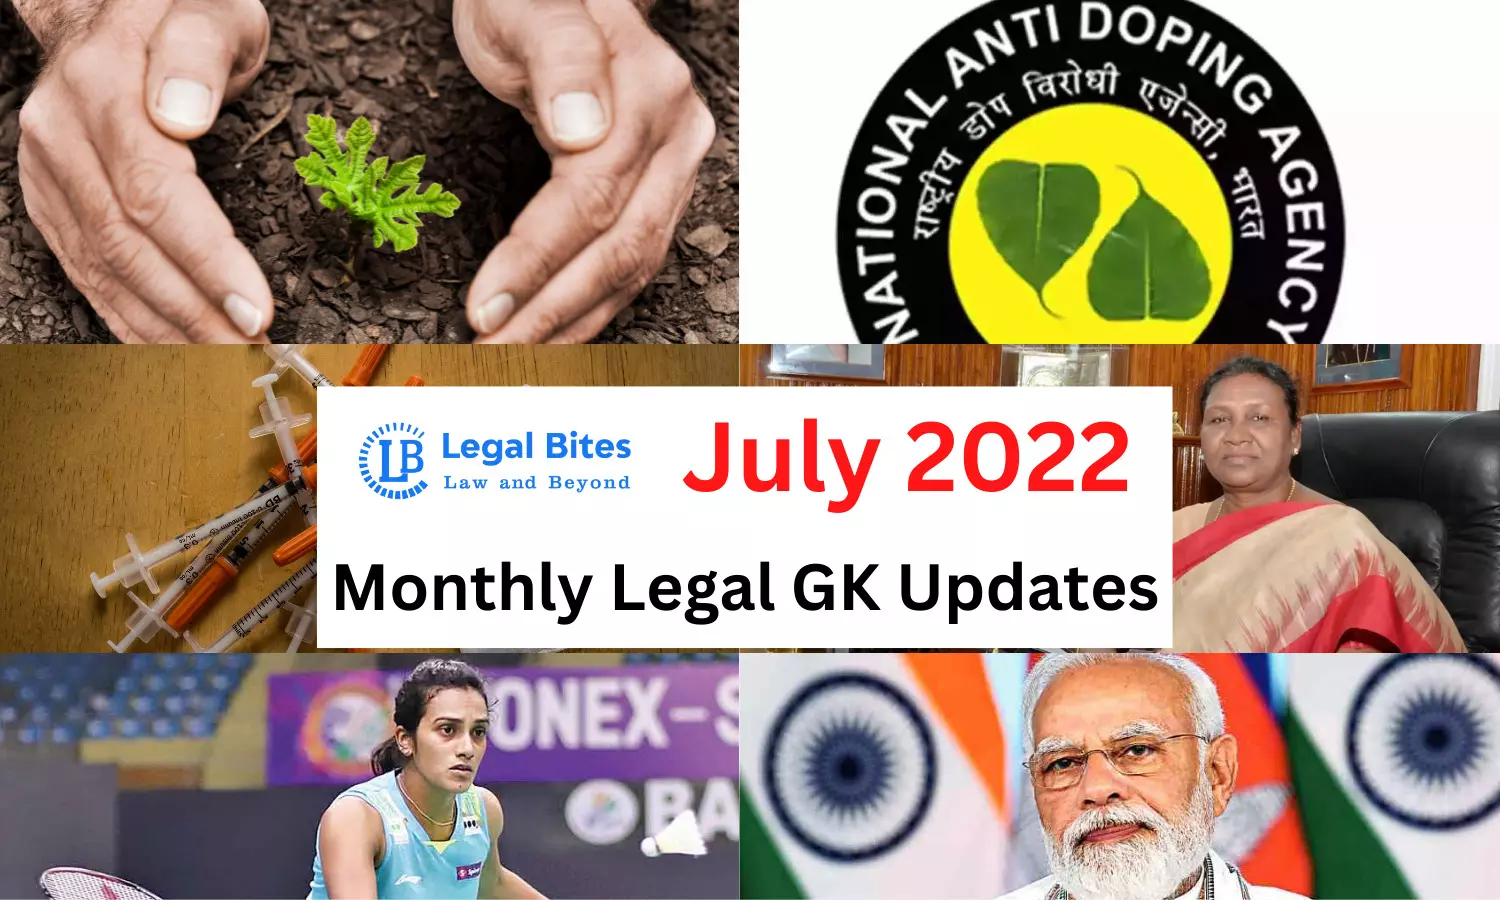 Legal Bites July 2022: Monthly Legal GK Updates